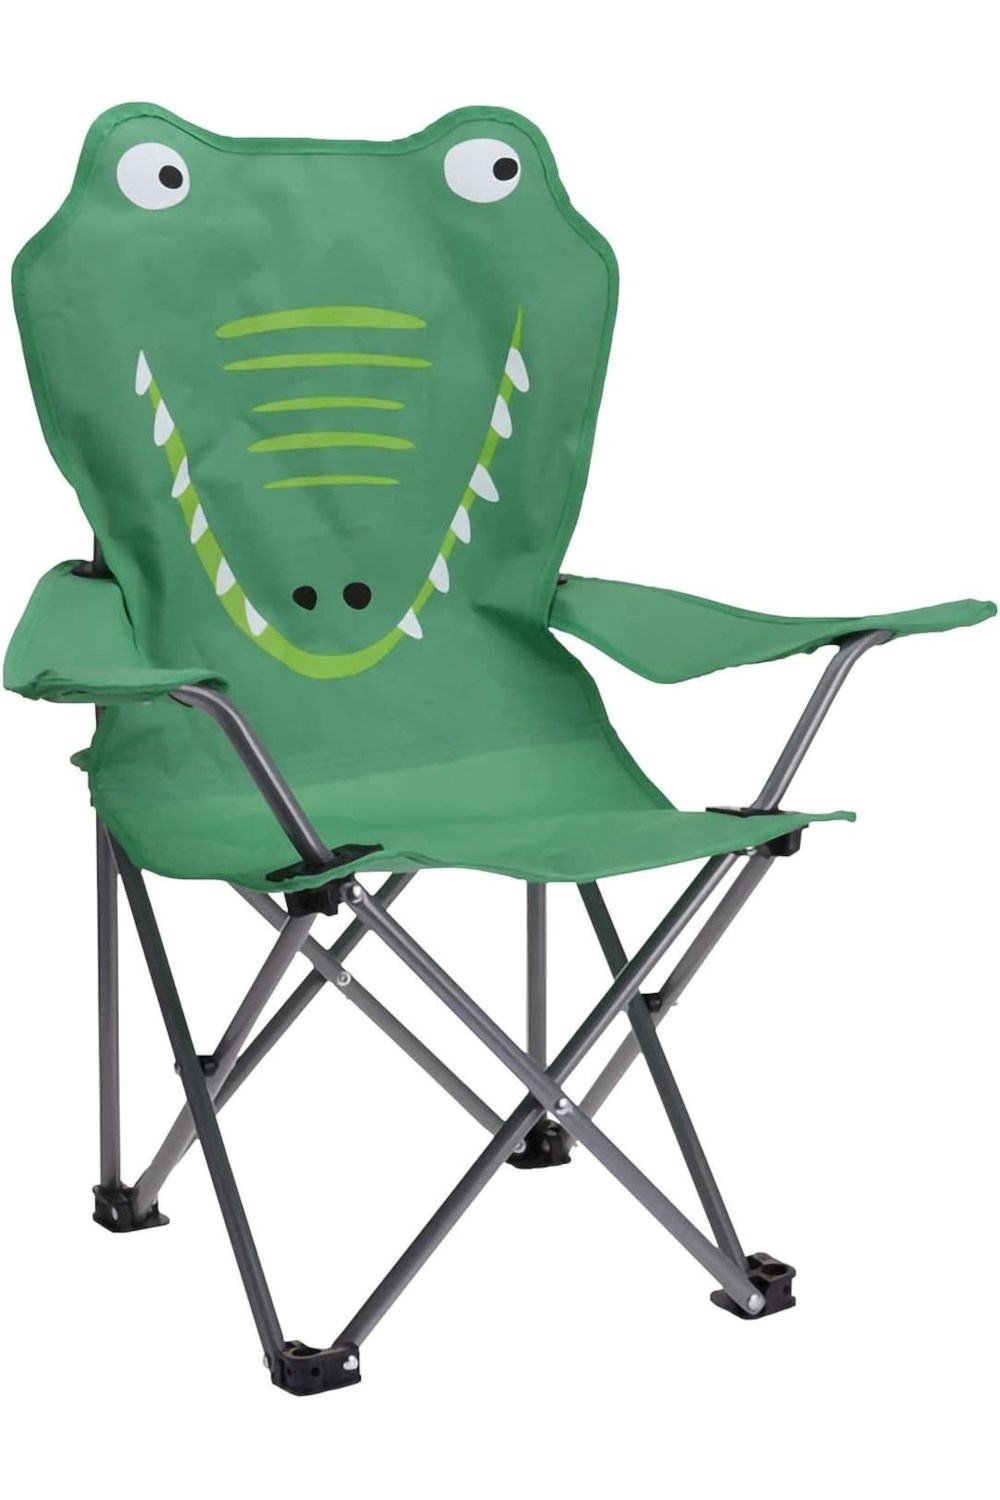 Kids Camping Deck Chair -